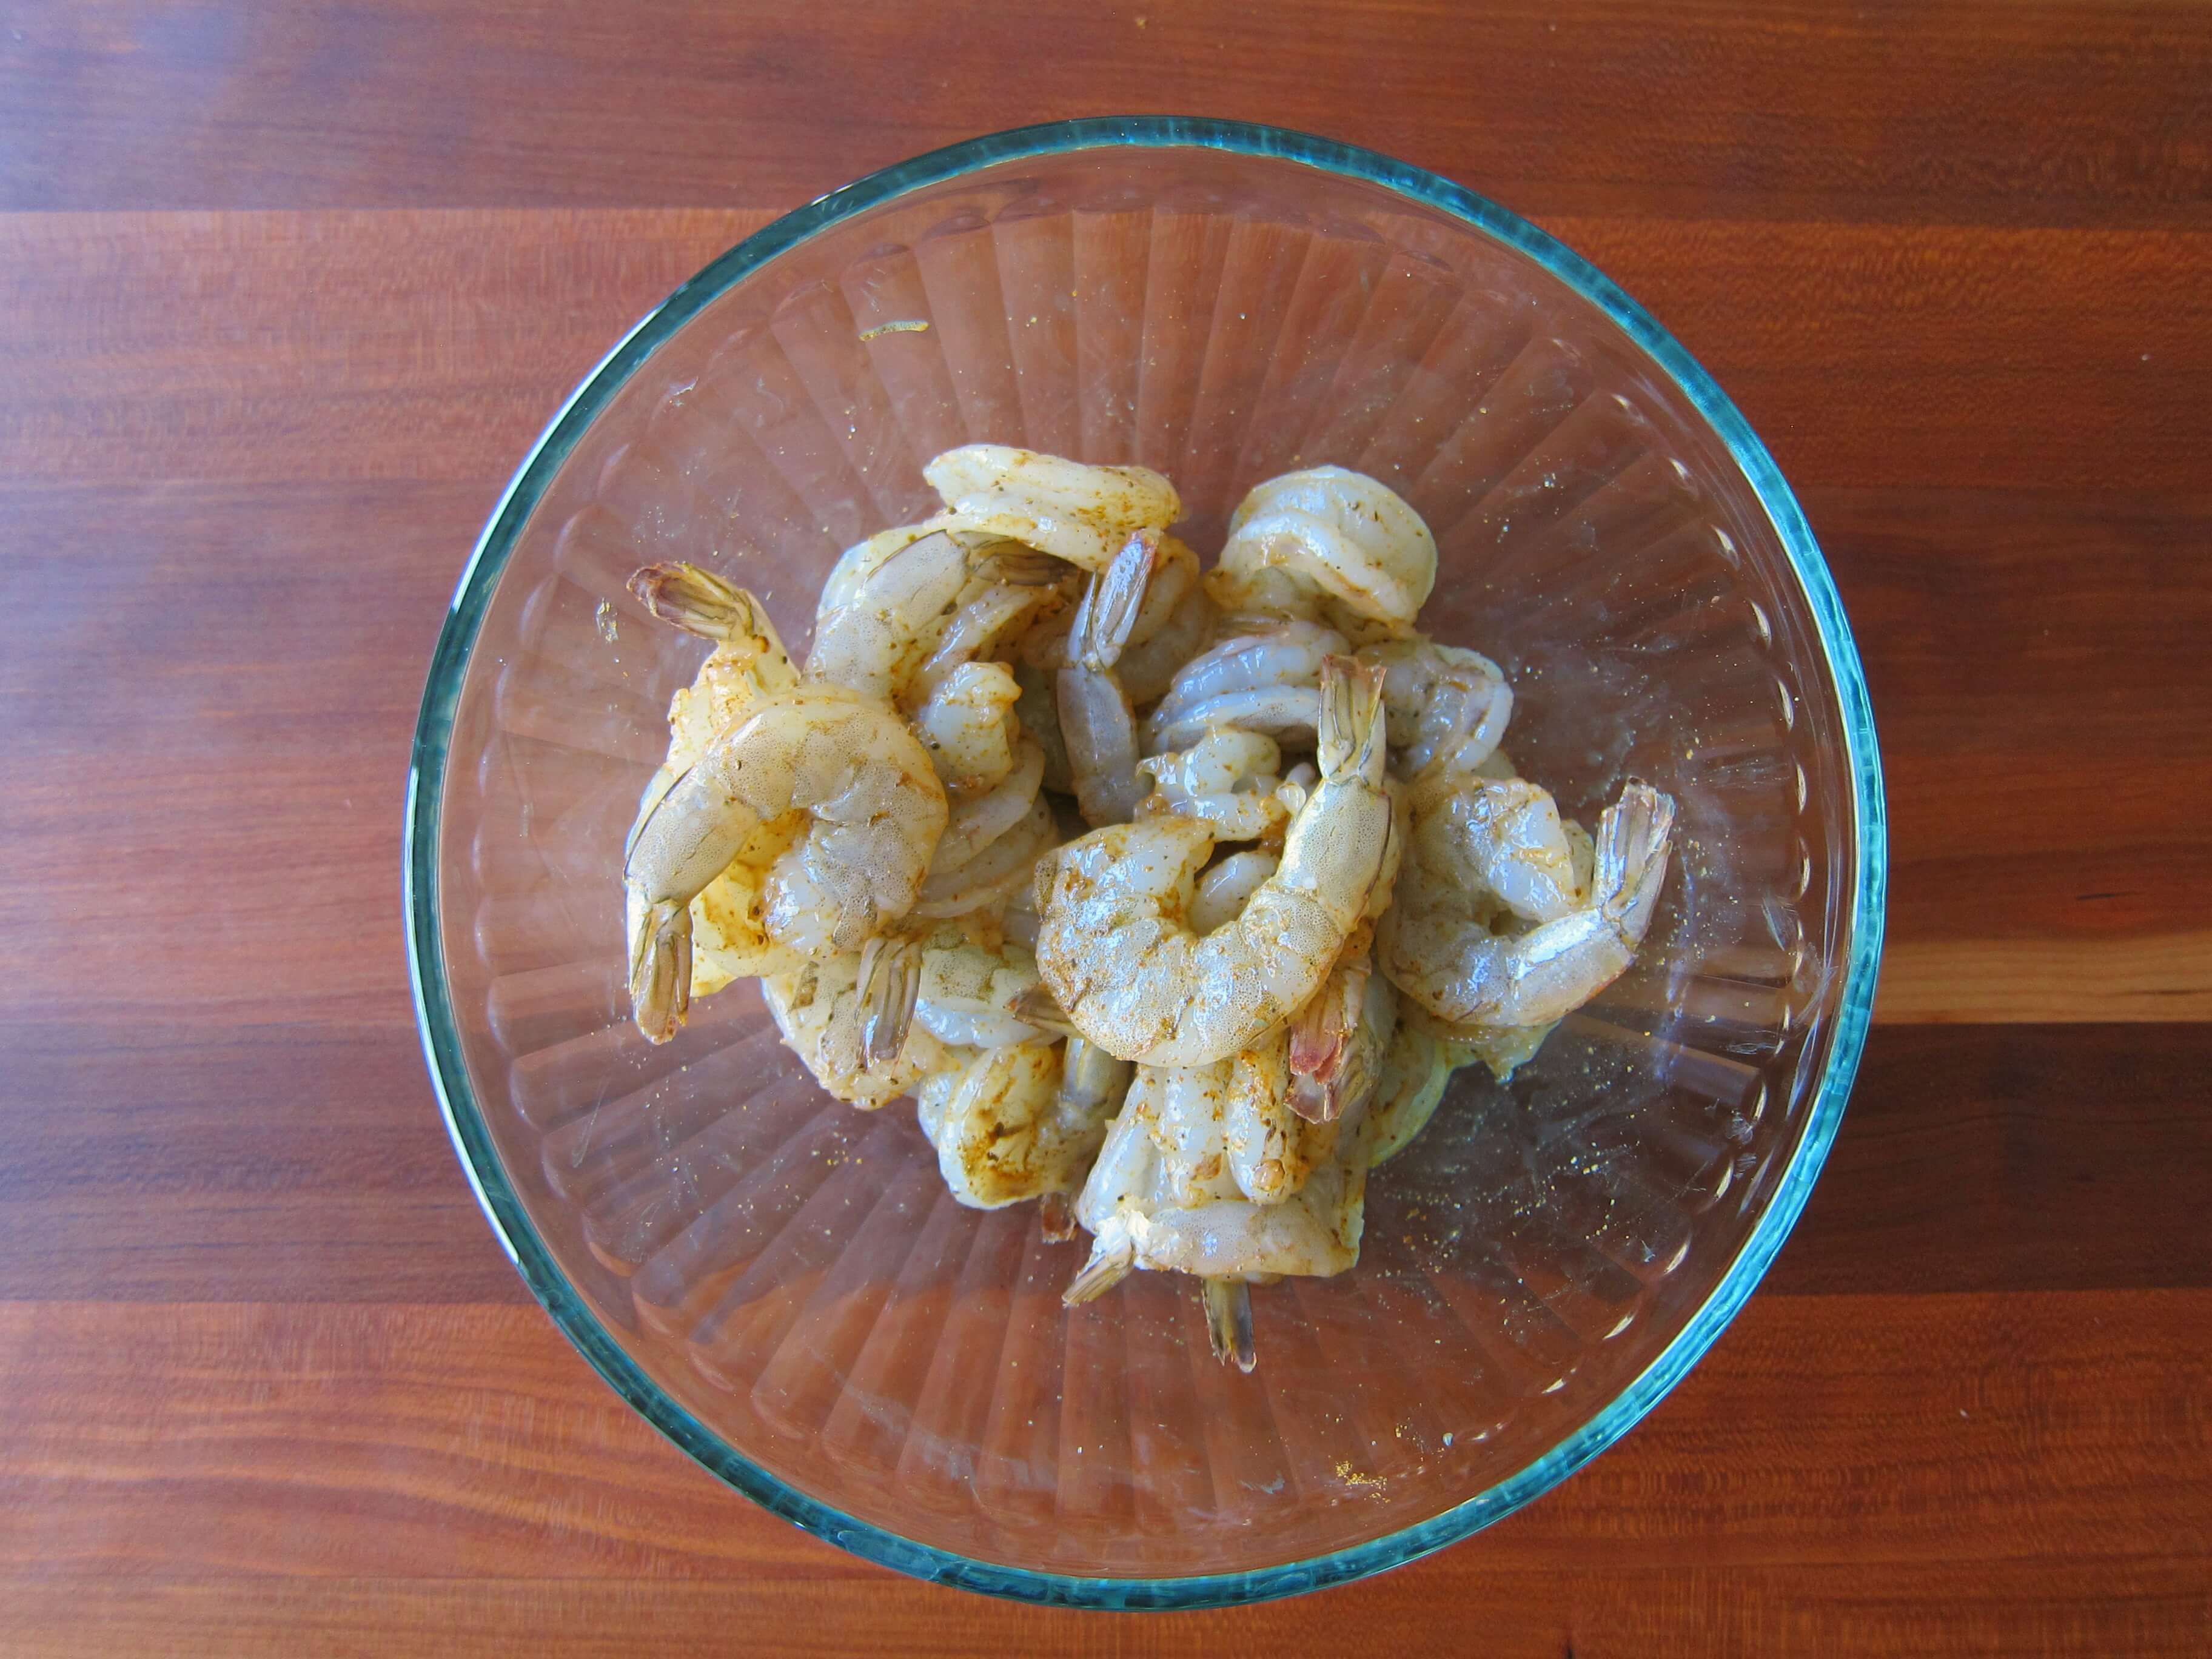 Shrimp in bowl with seasoning